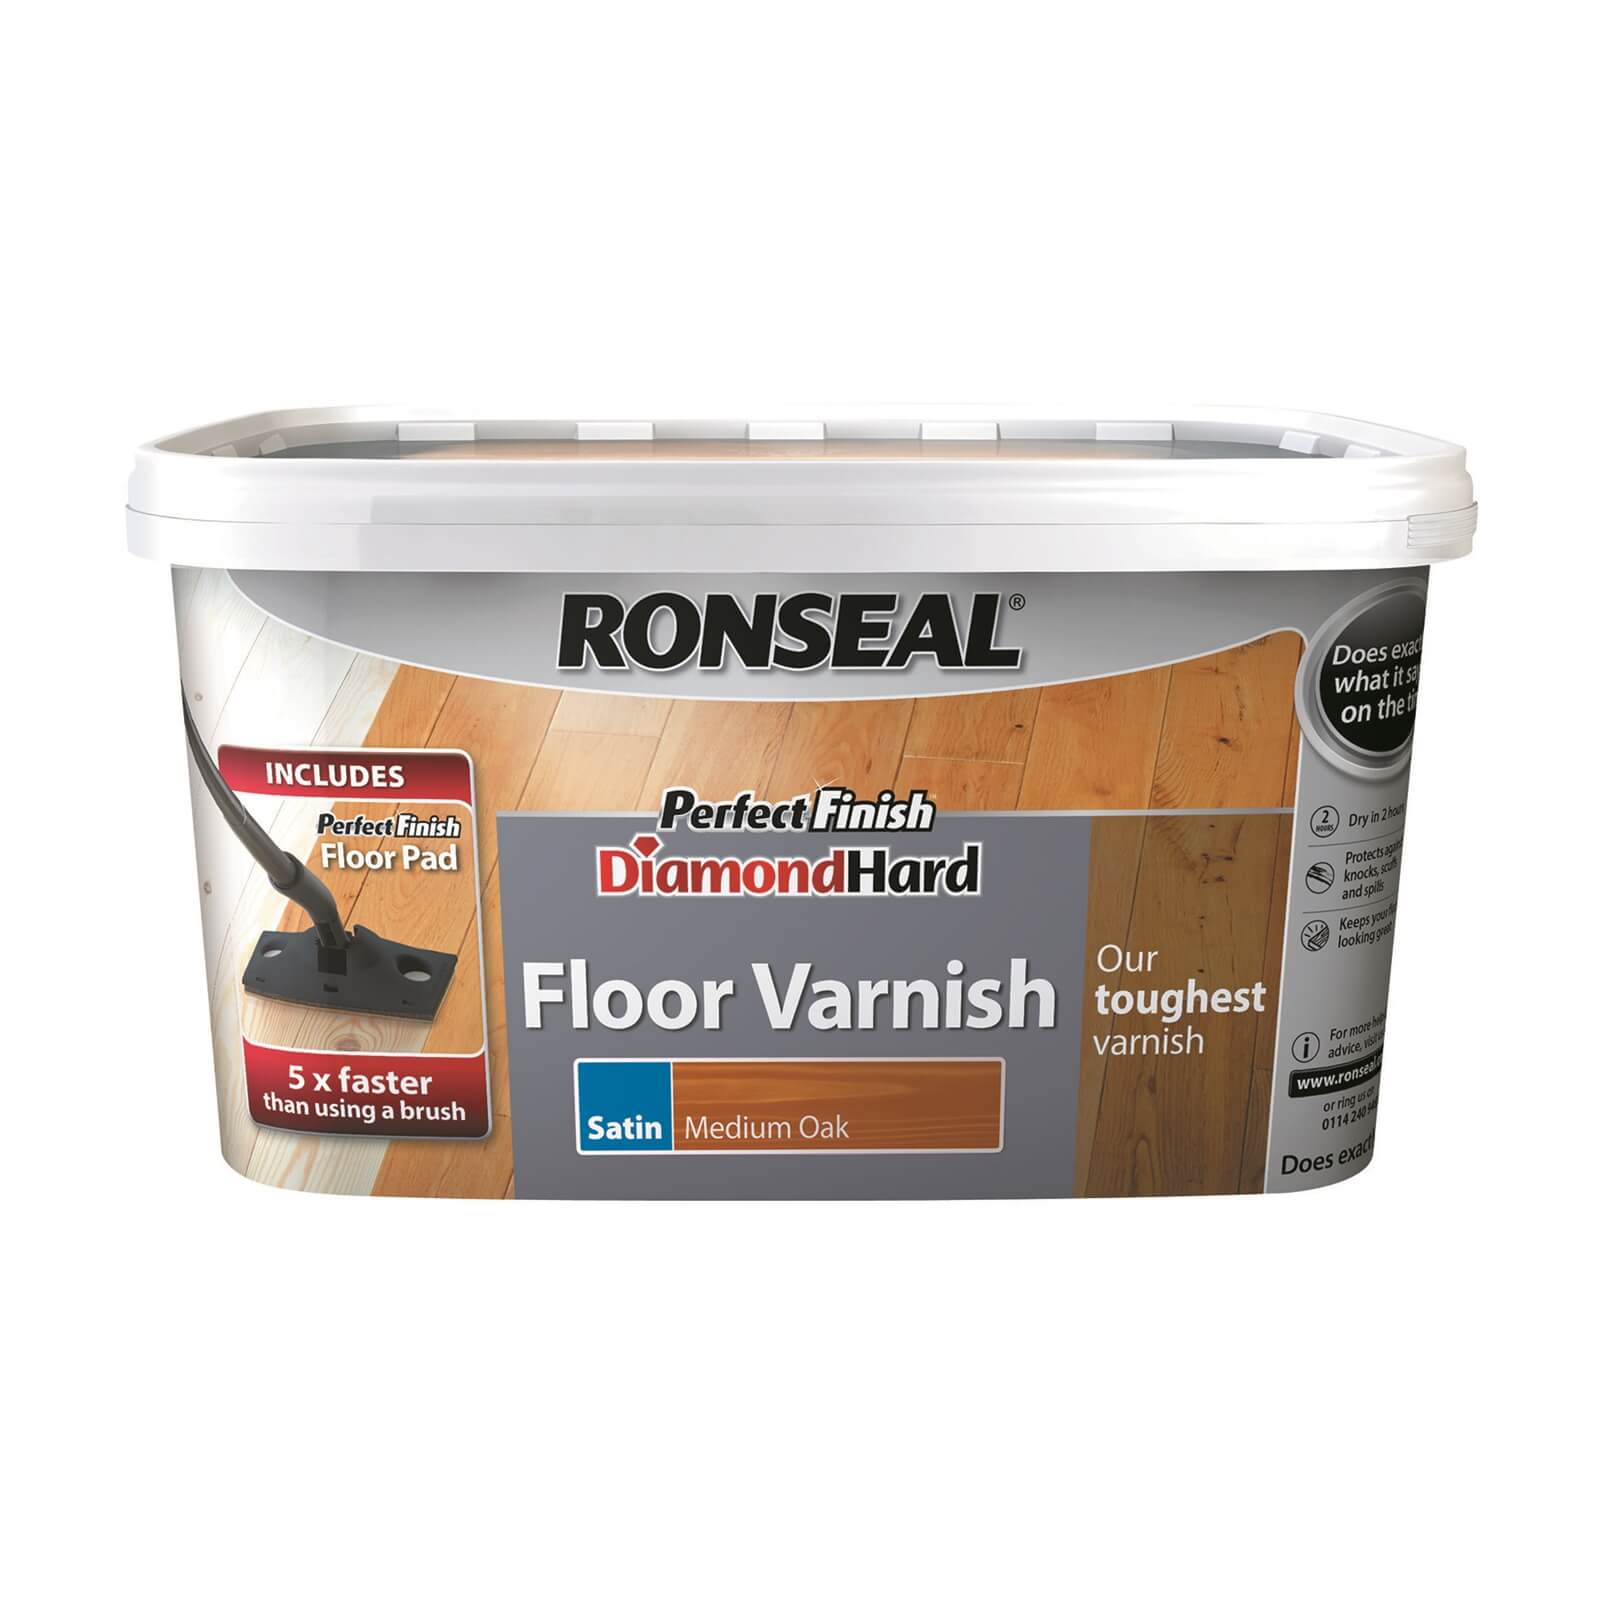 Ronseal Perfect Finish Diamond Hard Floor Varnish Medium Oak - 2.5L